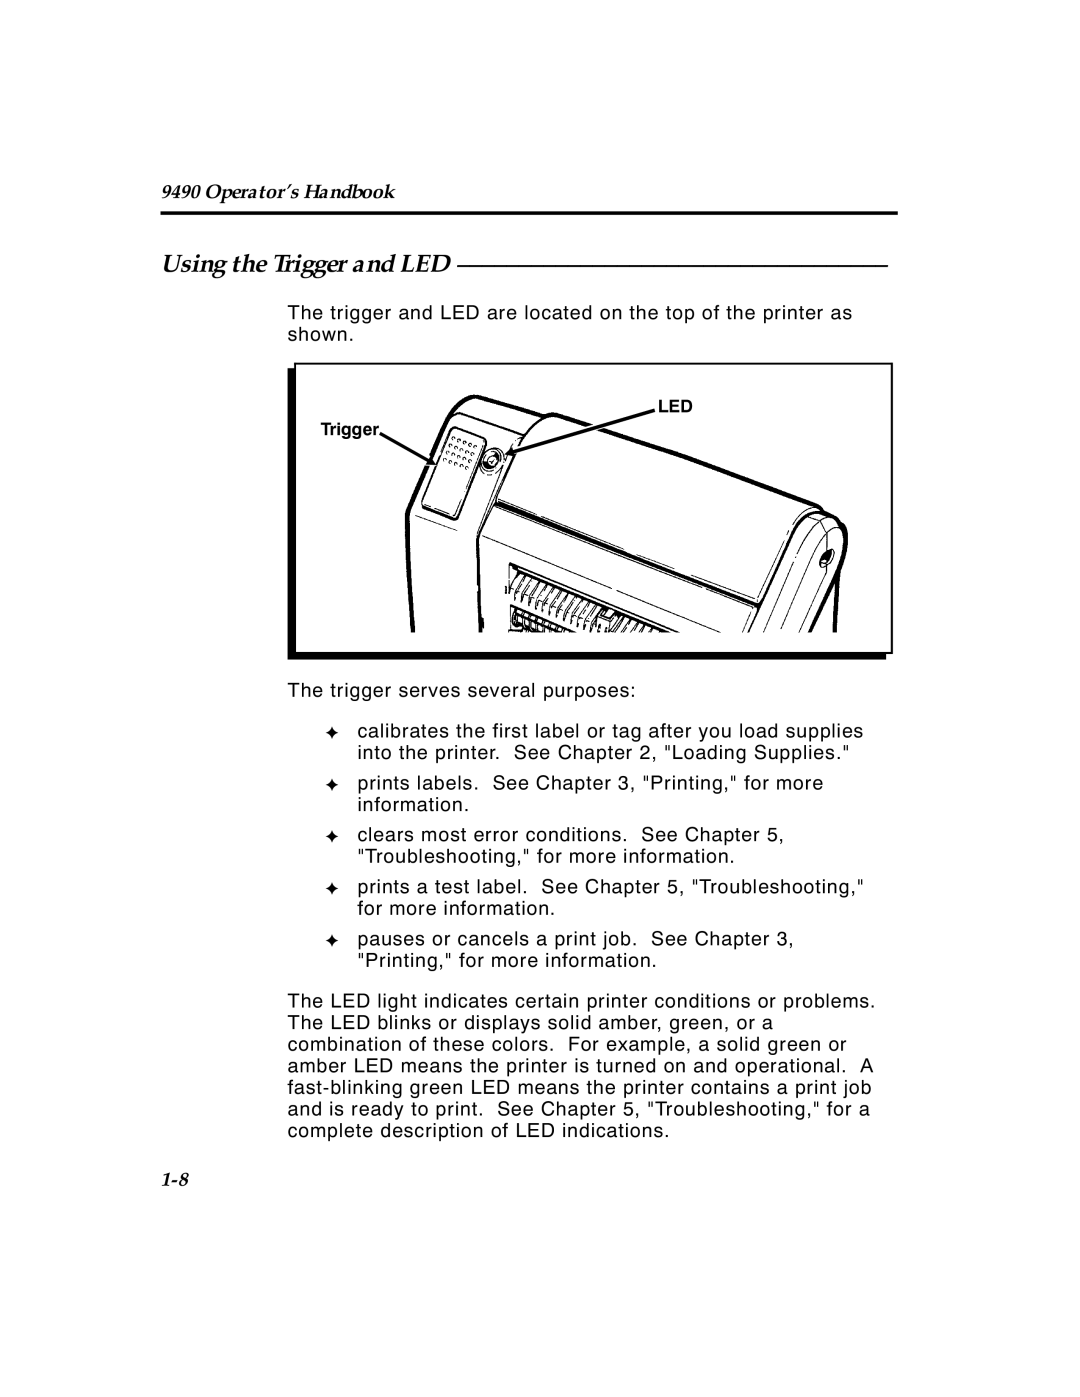 Paxar 4 manual Using the Trigger and LED, Operator’s Handbook 